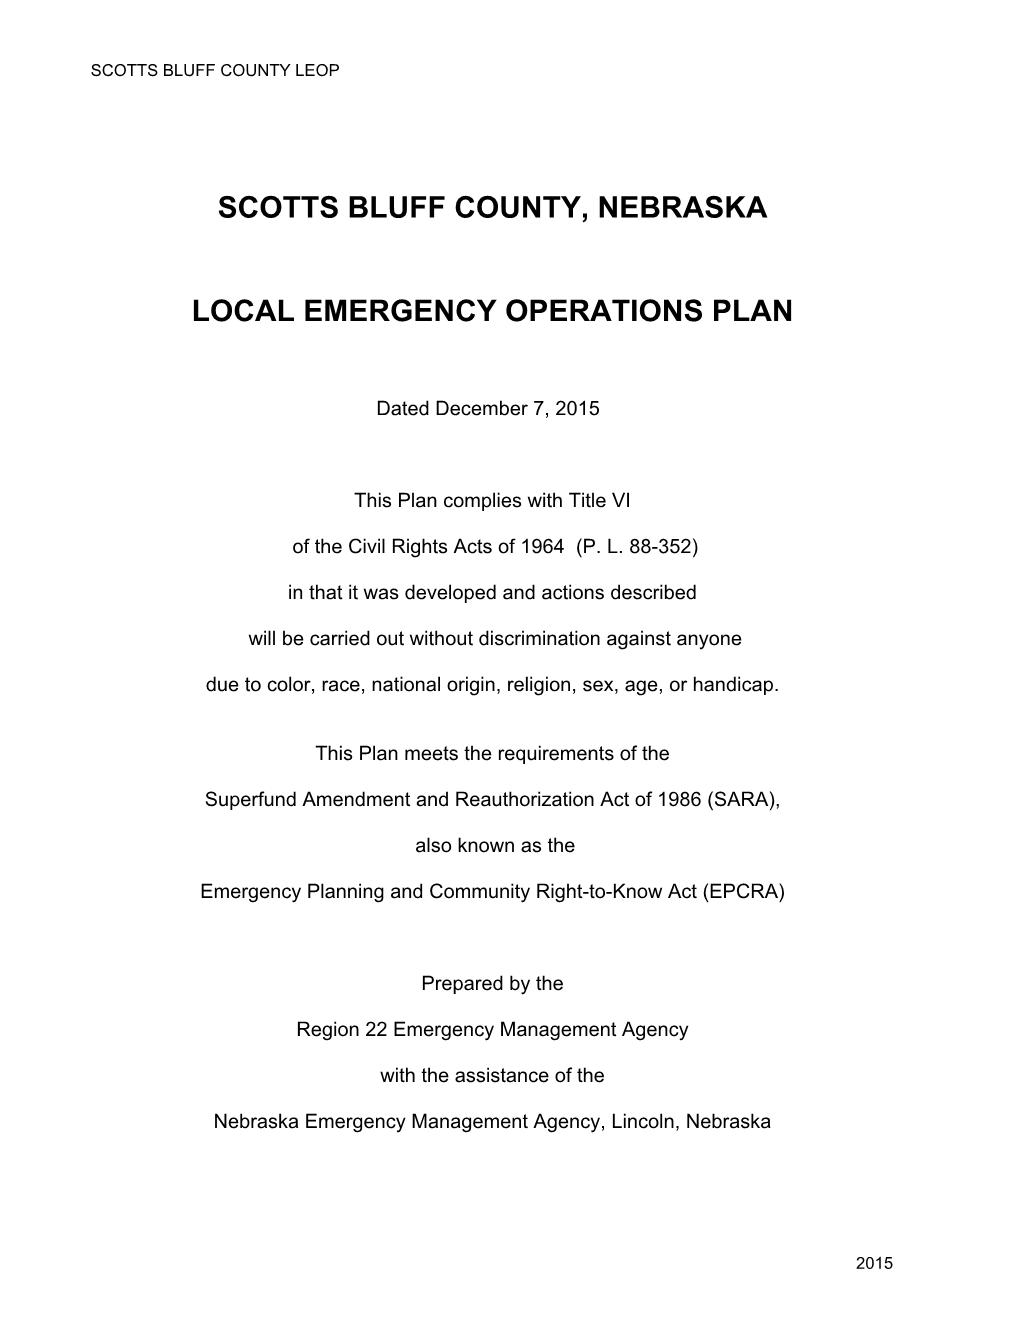 Scotts Bluff County, Nebraska Local Emergency